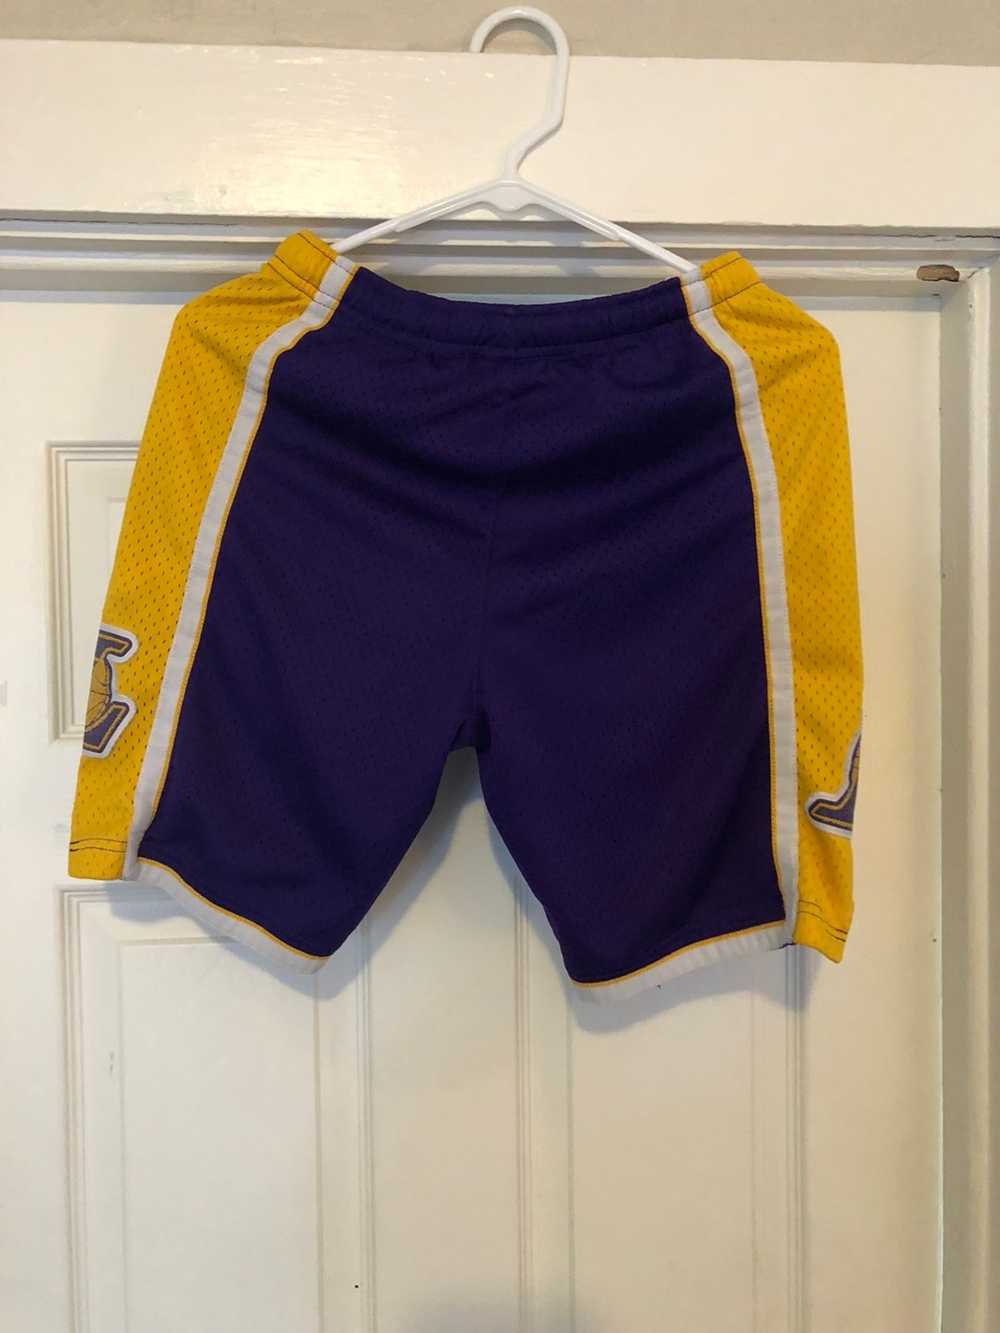 🚢 LA Lakers Jersey #93 Yellow  La lakers jersey, Mens shorts